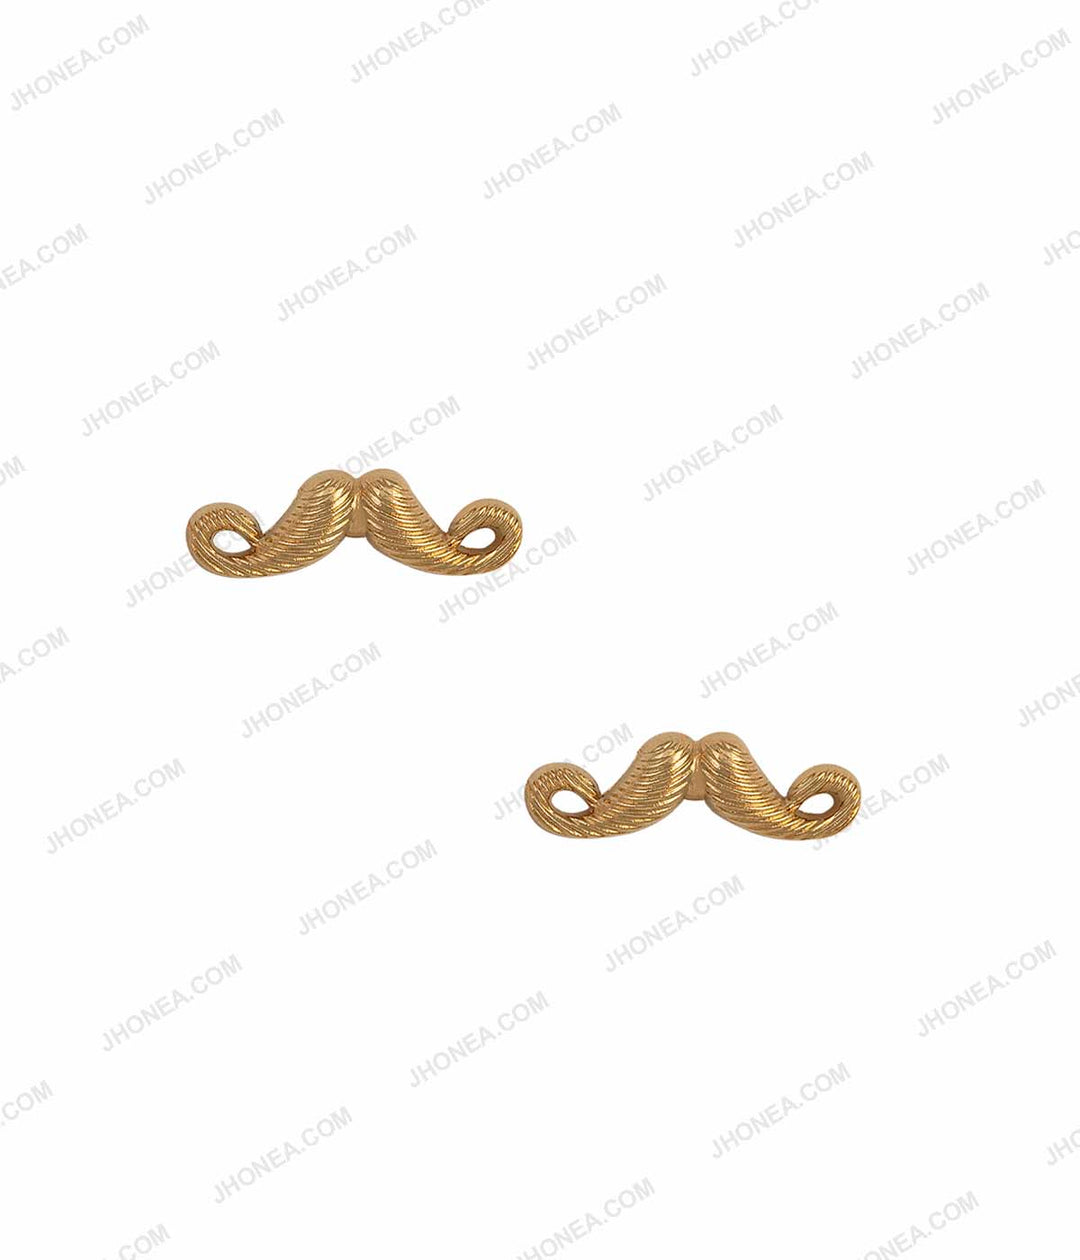 Golden Mustache Collar Pin Brooch for Men